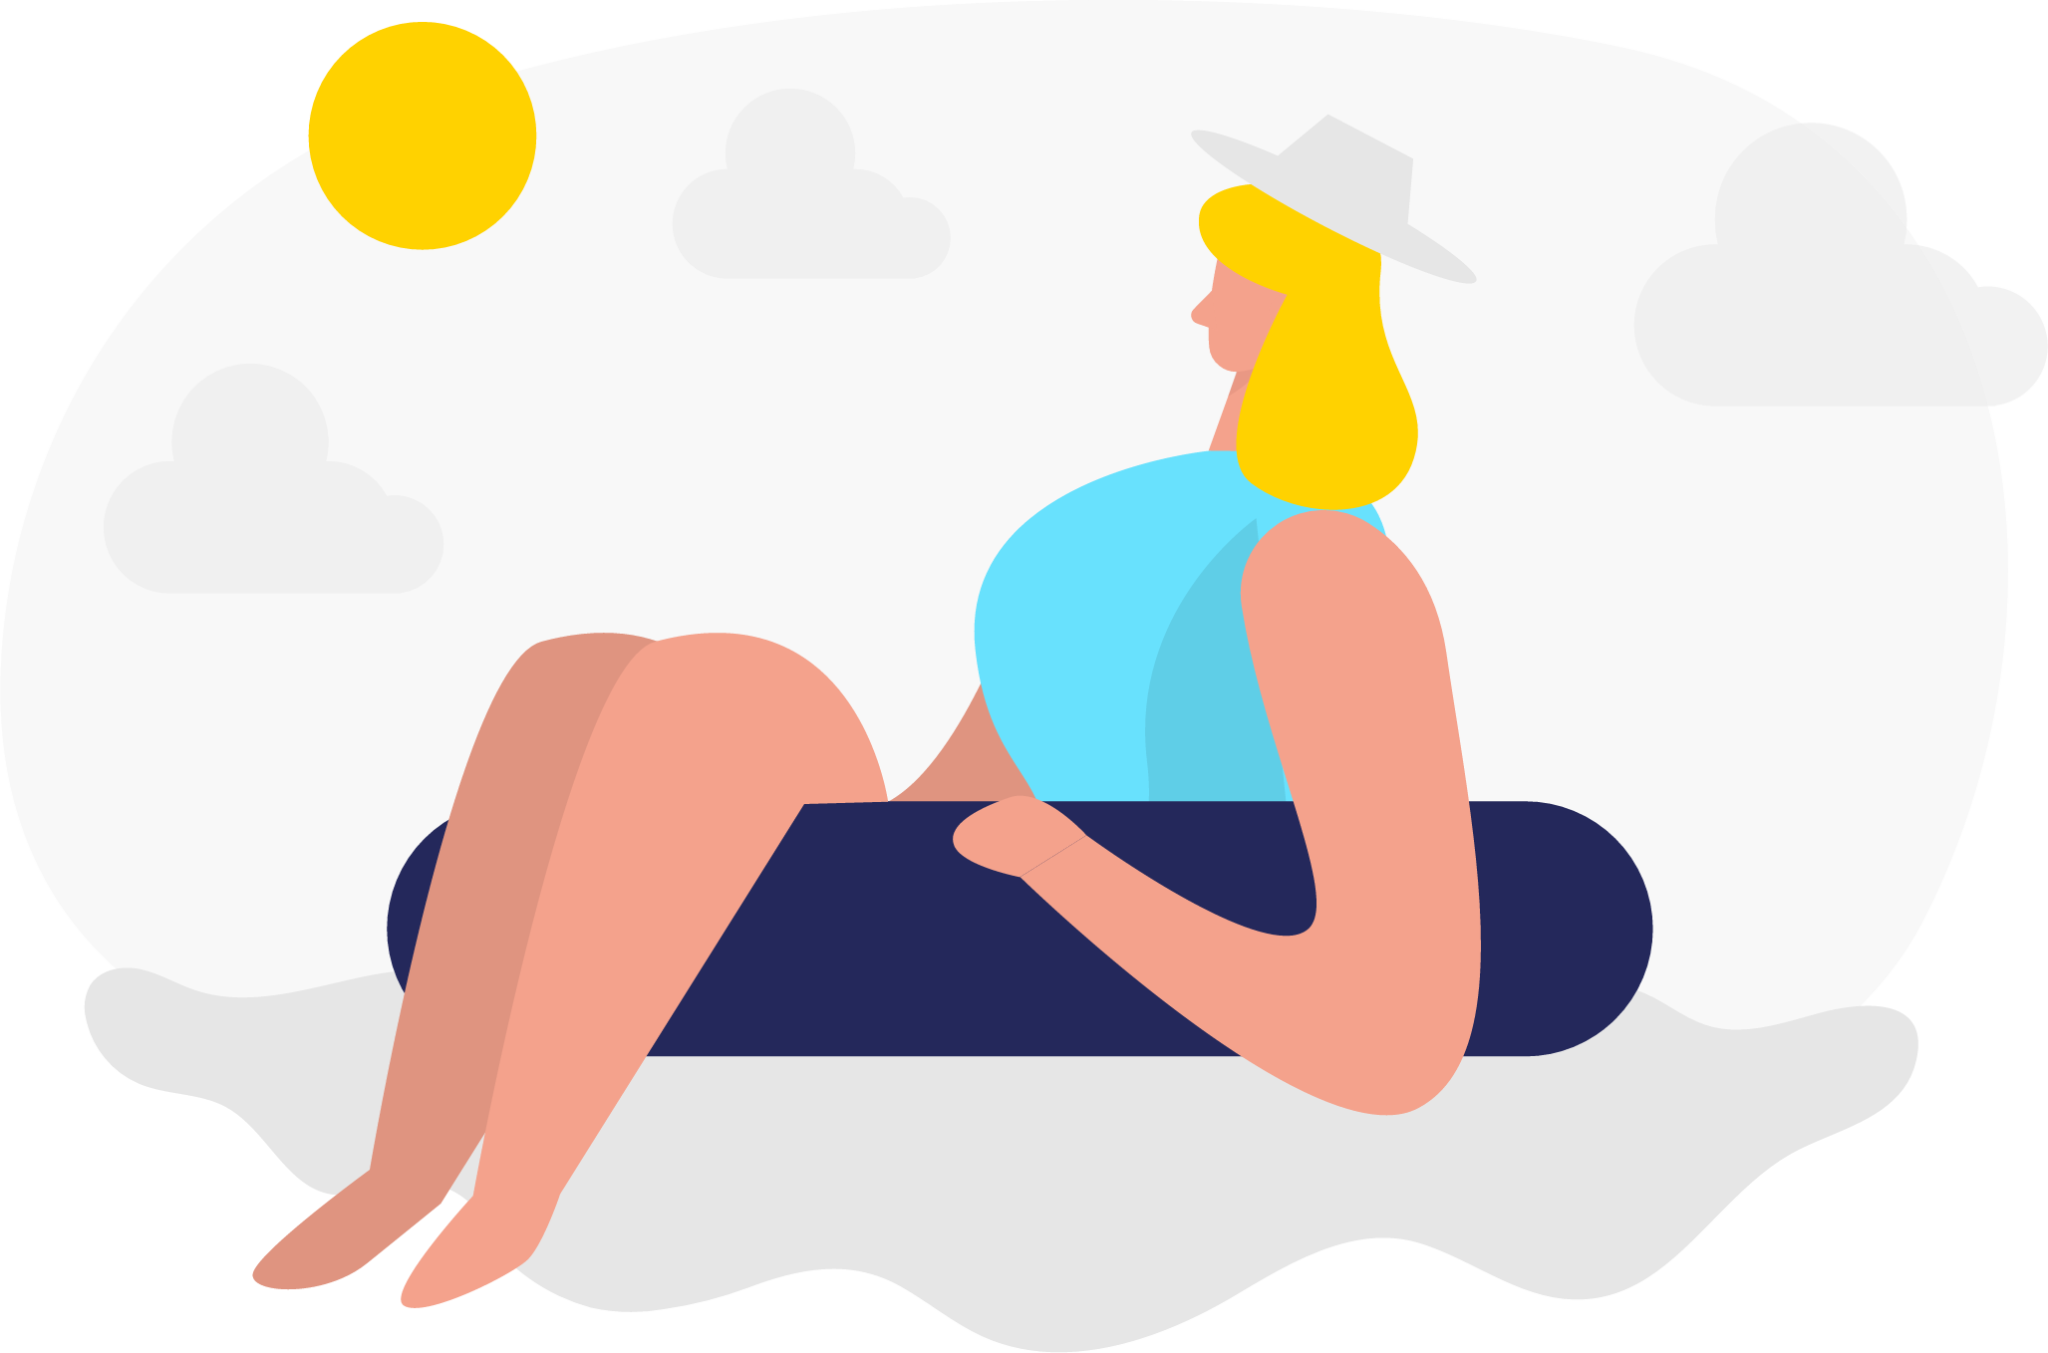 Girl swimming illustration